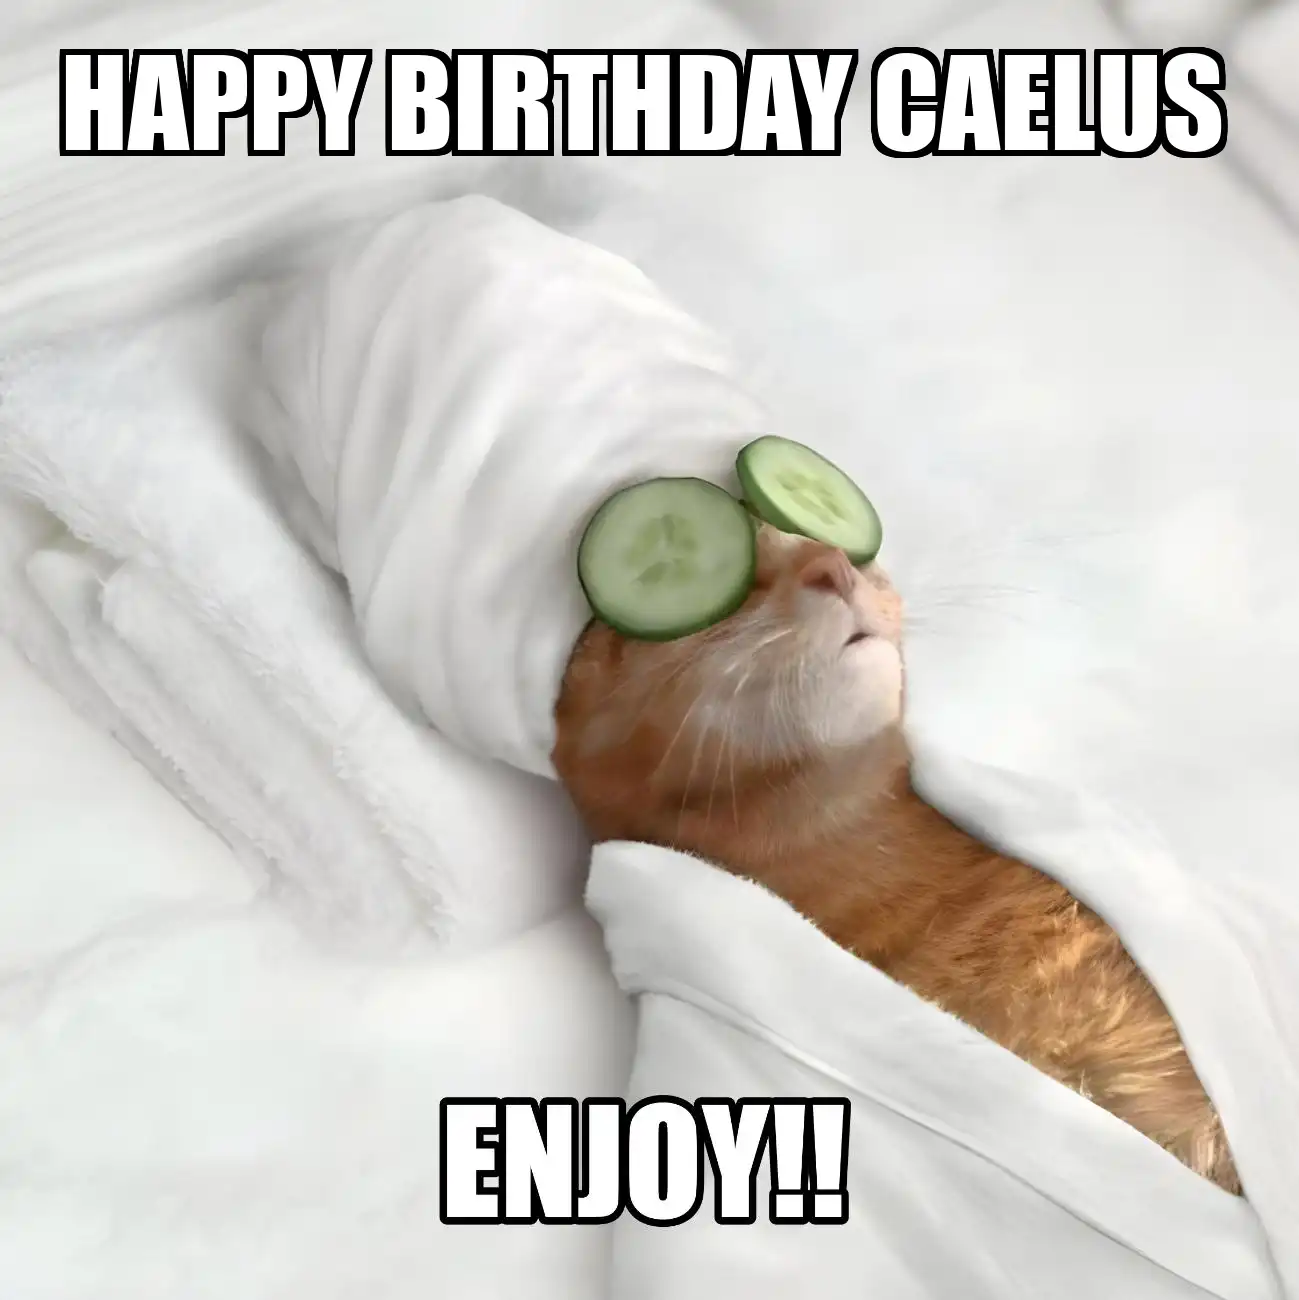 Happy Birthday Caelus Enjoy Cat Meme